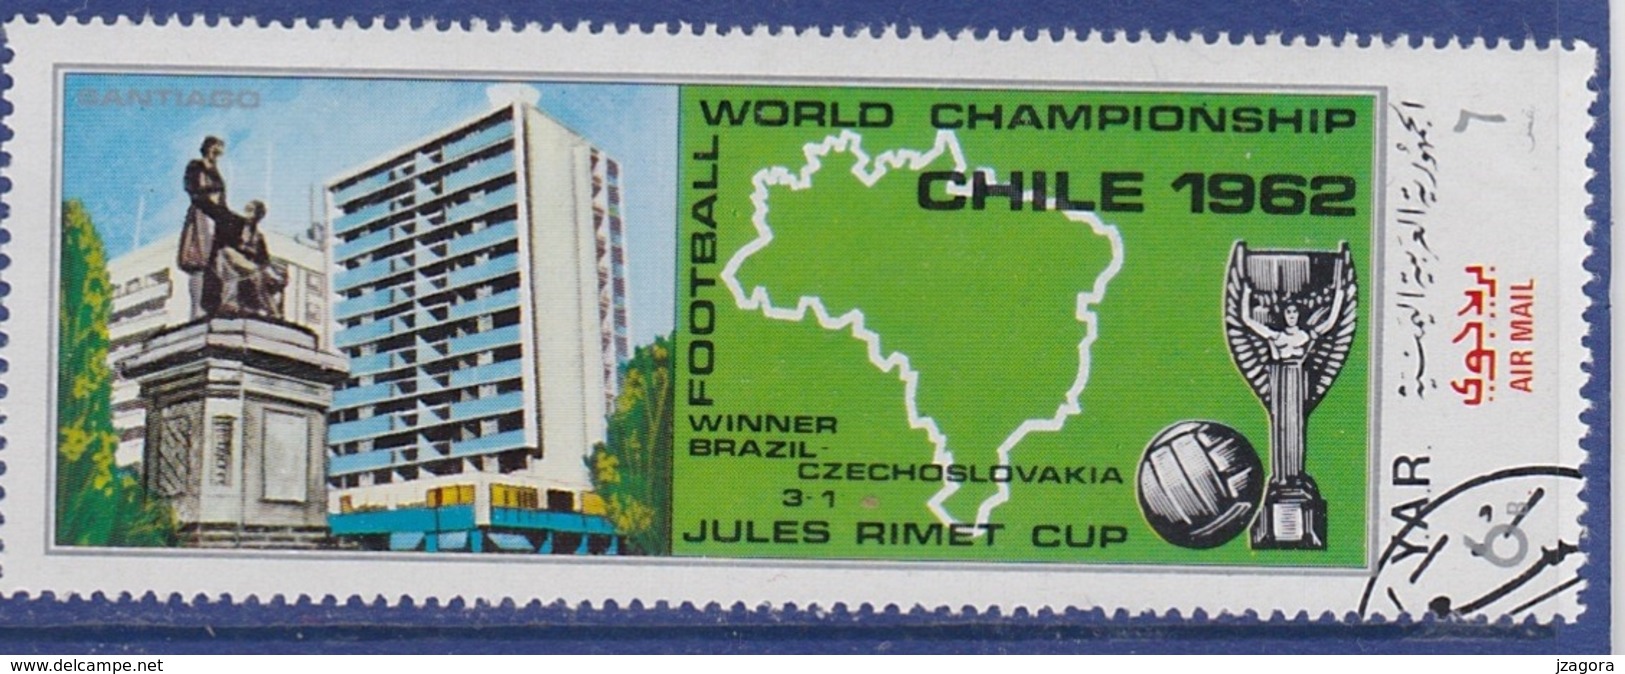 SOCCER FOOTBALL WORLD CHAMPIONSHIP MUNDIAL CHILE 1962 - YAR YEMEN - 1962 – Cile